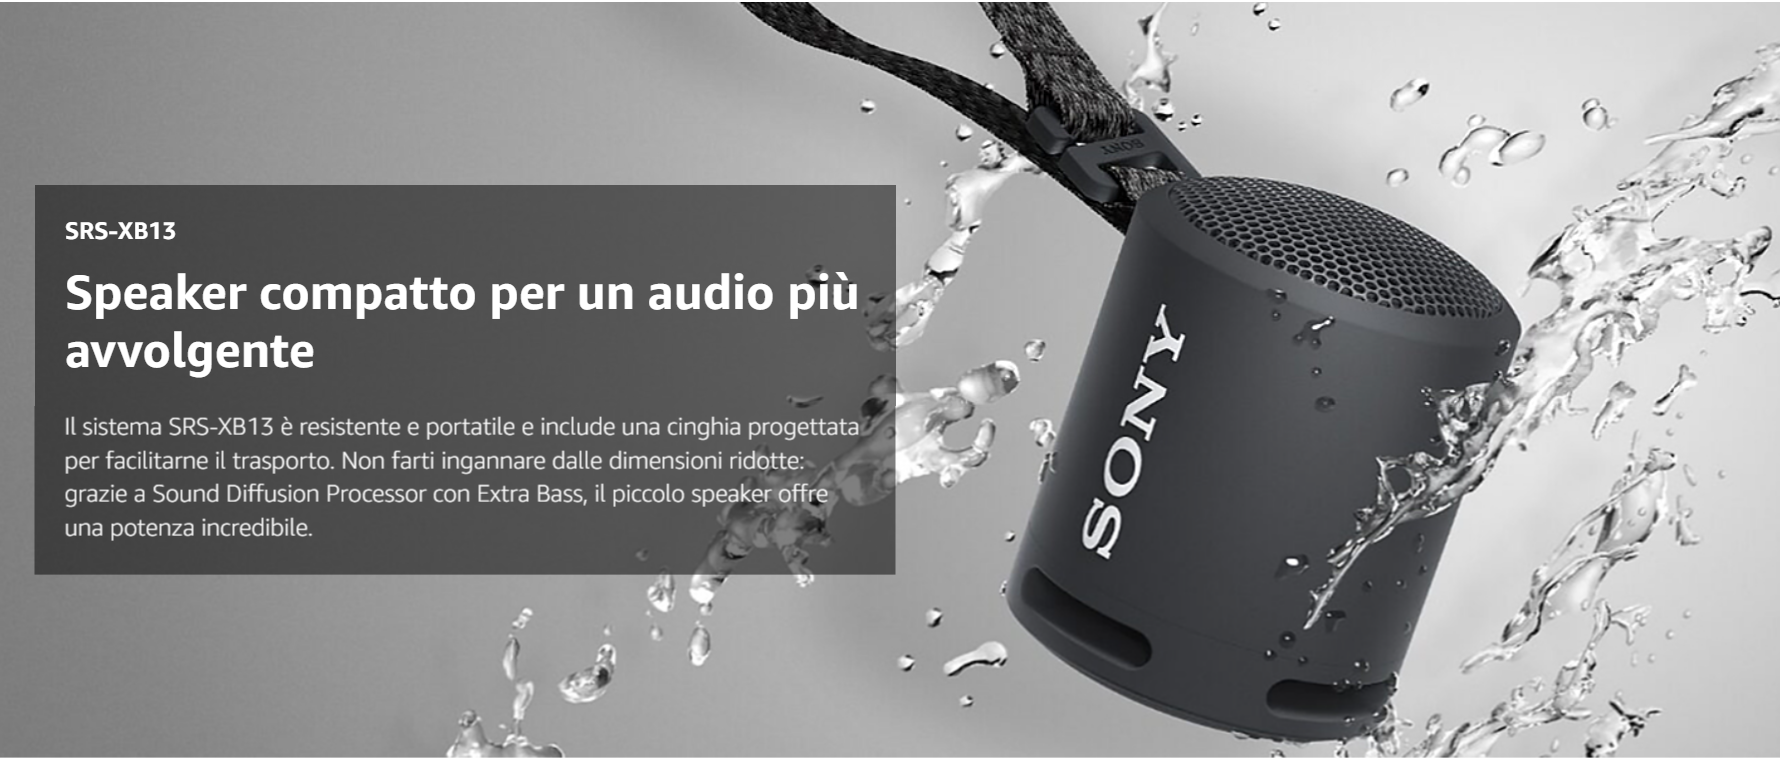 fantastico-speaker-sony-srs-xb13-sconto-45-amazon-design